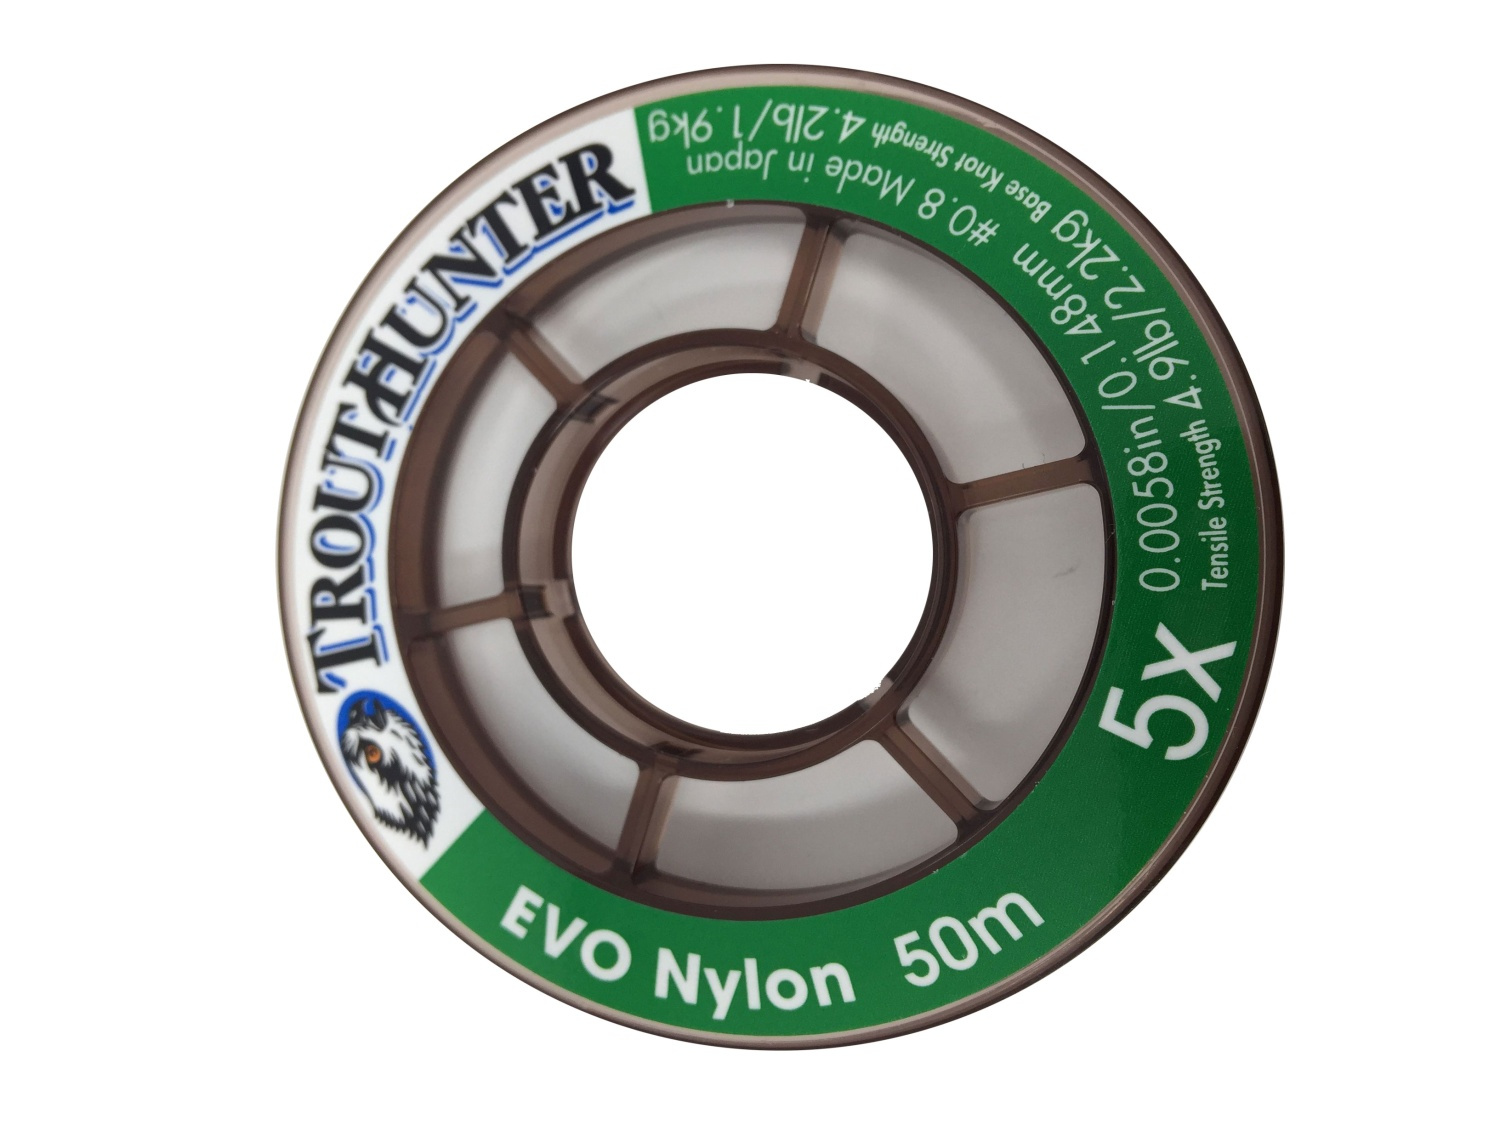 Trout Hunter Nylon EVO Tafsmaterial - 4.5X - 0,165 mm